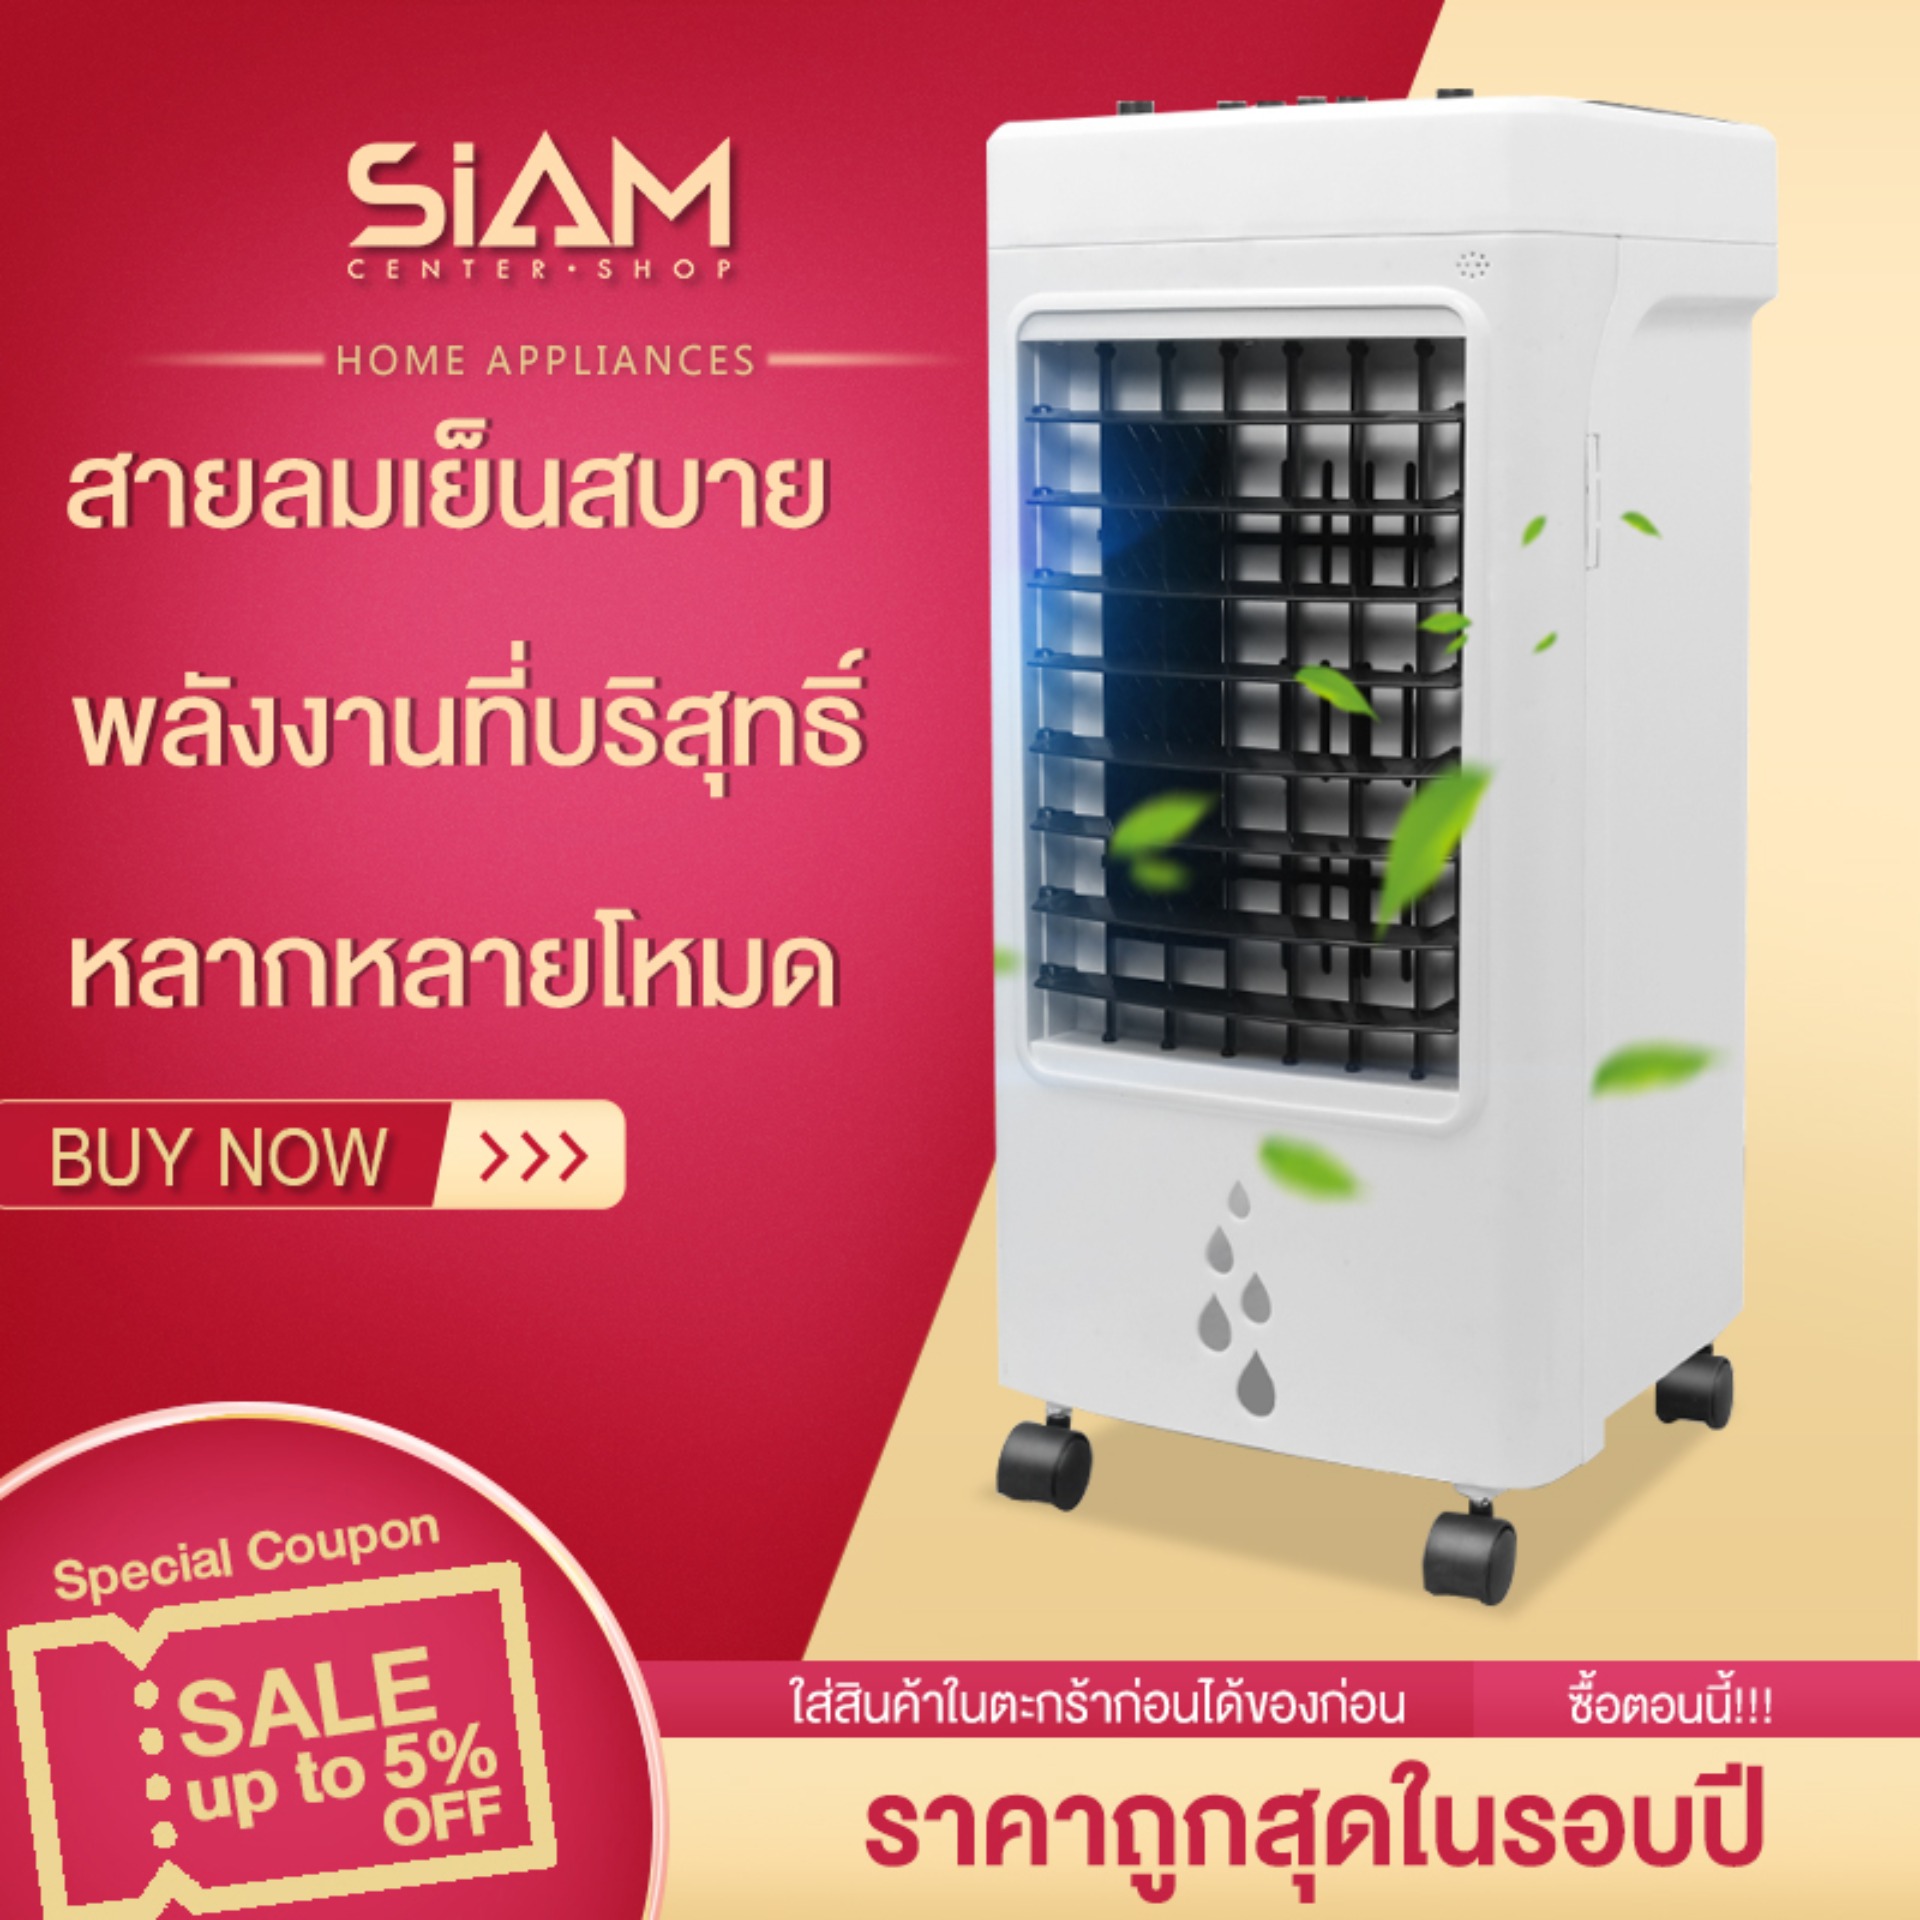 Siam Center พัดลมไอเย็น พัดลมแอร์ พัดลมไอน้ำ เครื่องทำความเย็น พัดลมเครื่องปรับอากาศ มัลติฟังก์ชั่ พัดลมอากาศ  สาม- ความเร็ว ลมแรง